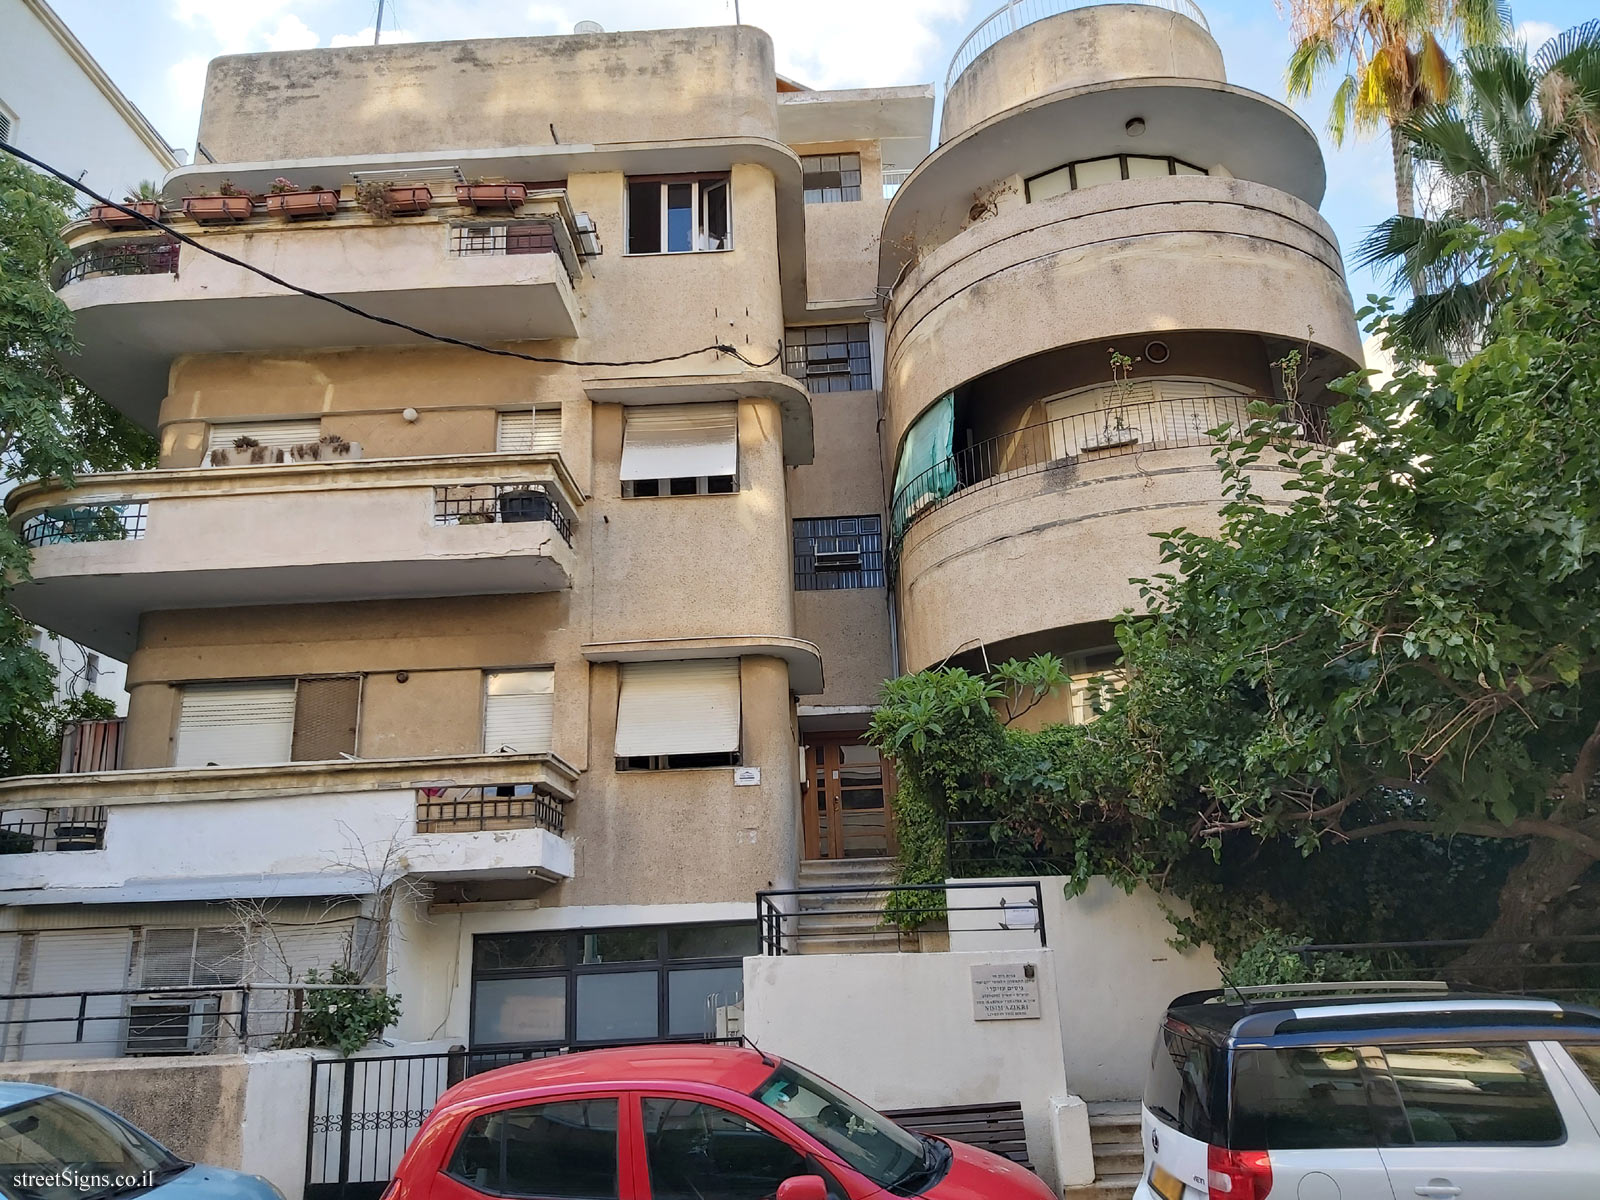 The house of Nisim Azikri - Bilu St 6, Tel Aviv-Yafo, Israel